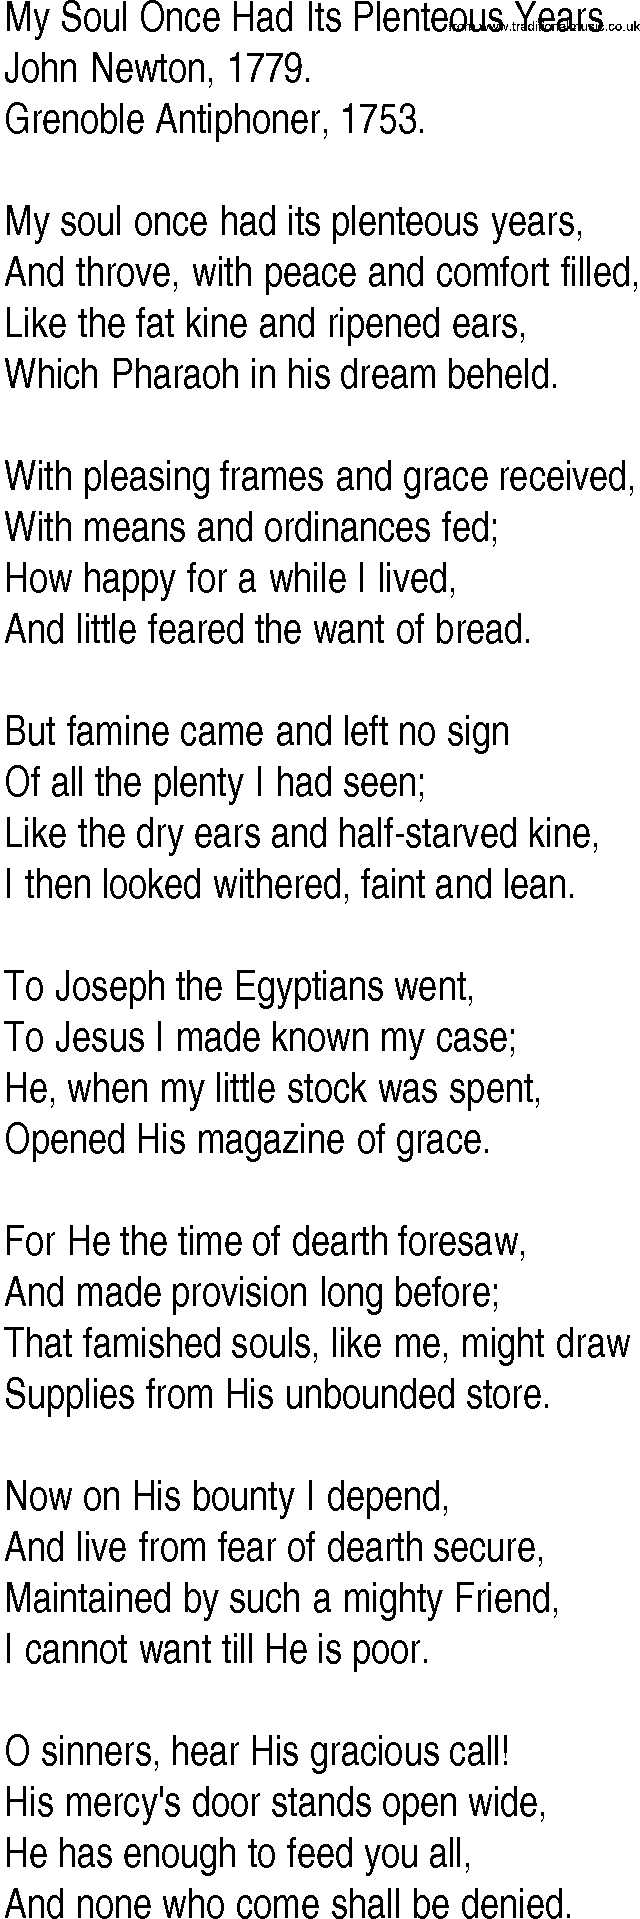 Hymn and Gospel Song: My Soul Once Had Its Plenteous Years by John Newton lyrics